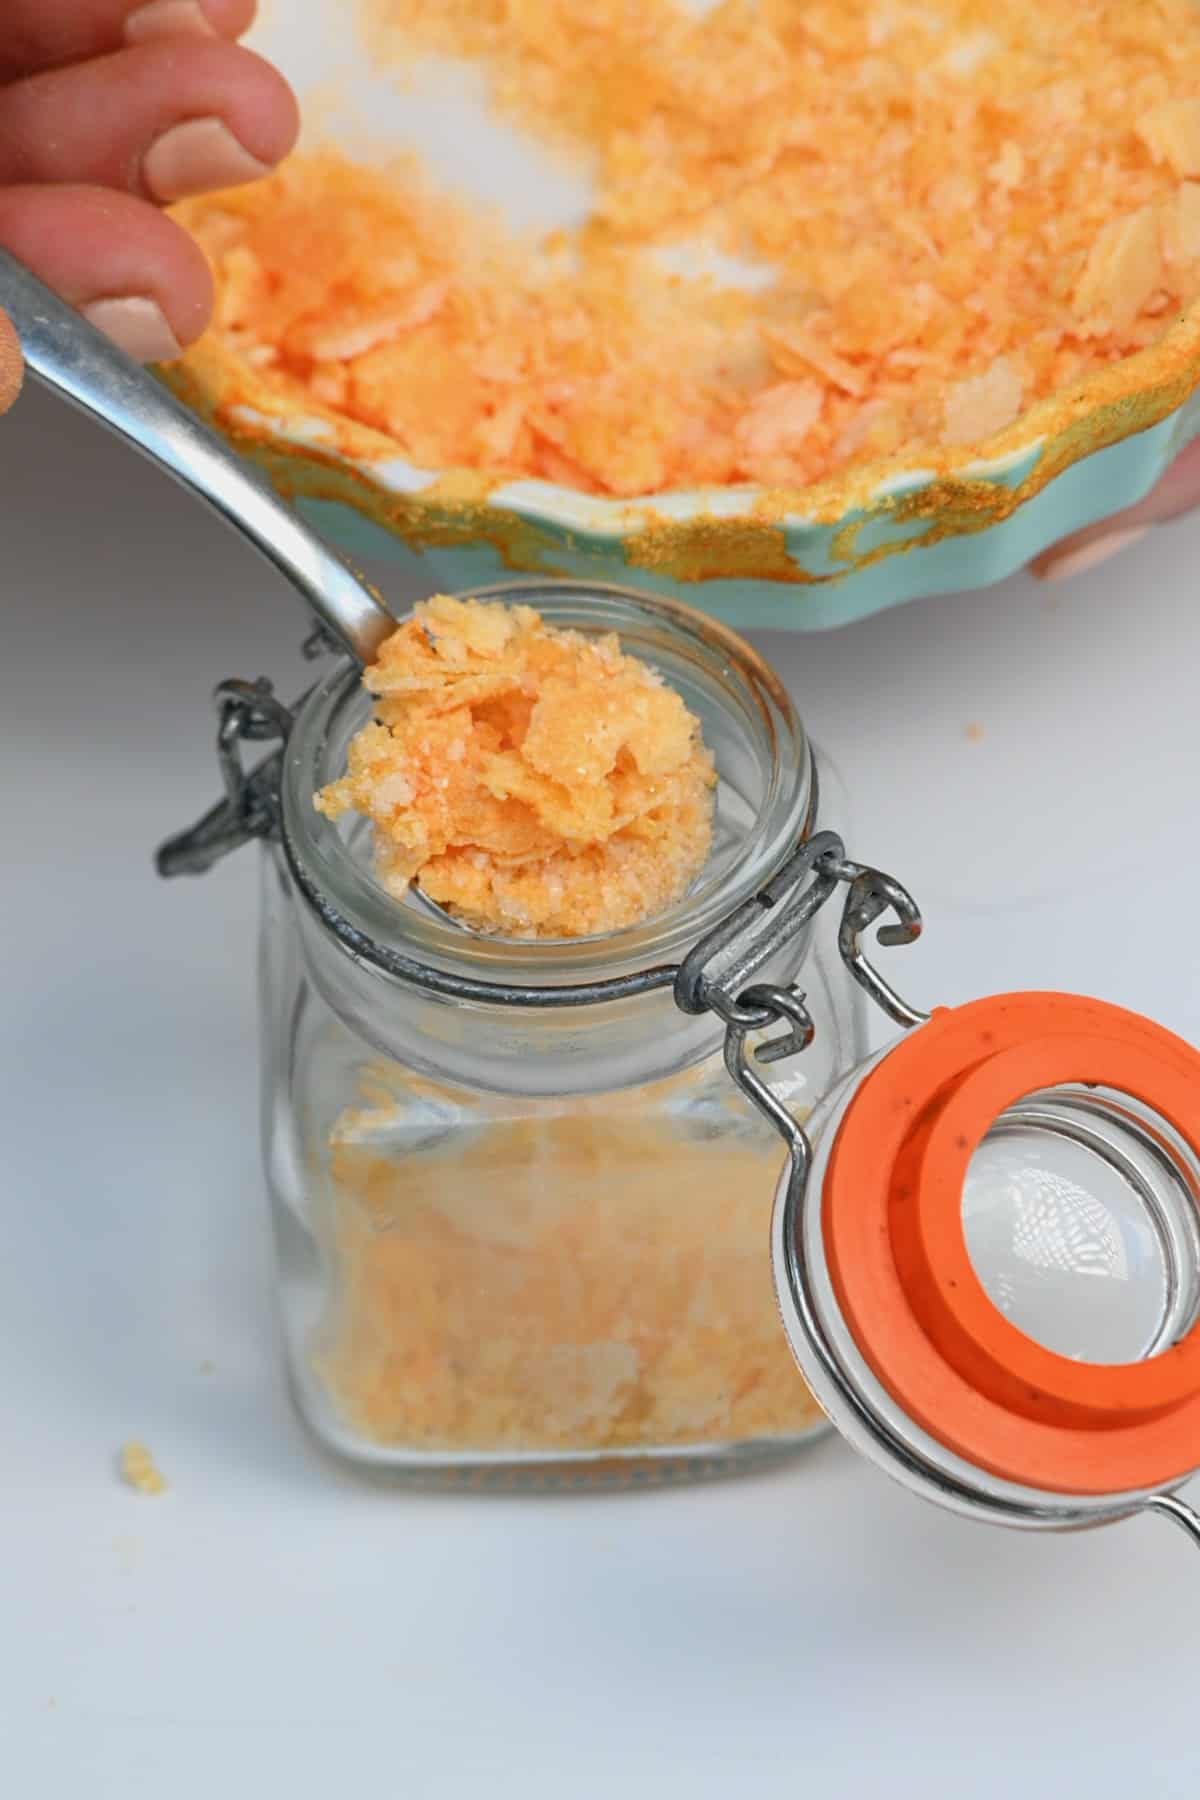 Filling a small jar with saffron flaky salt